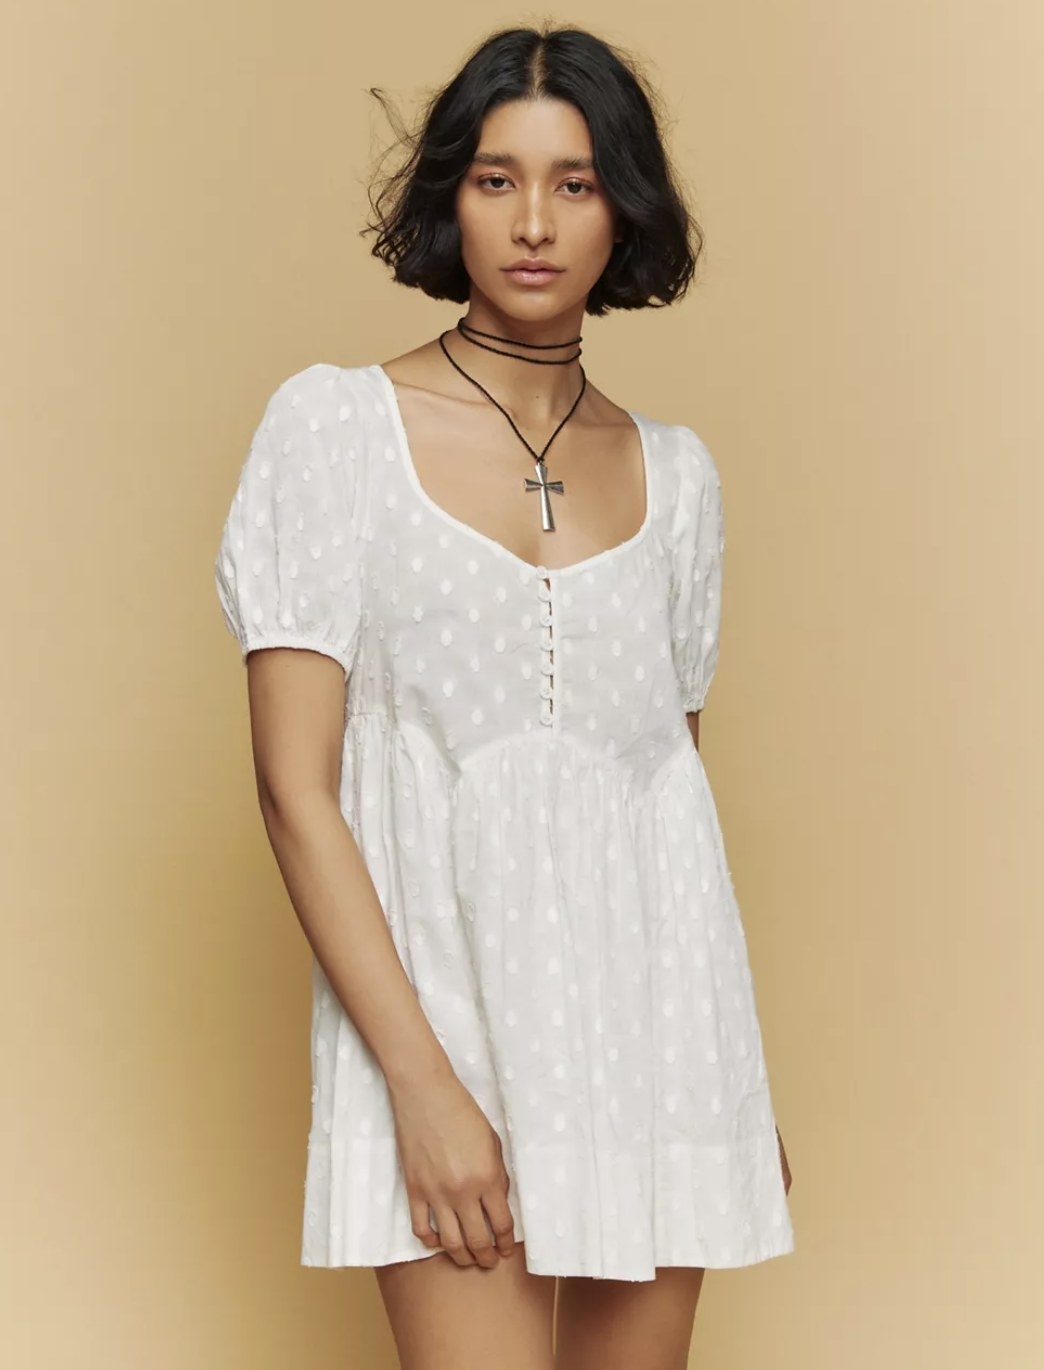 model wearing polka dot mini dress in white